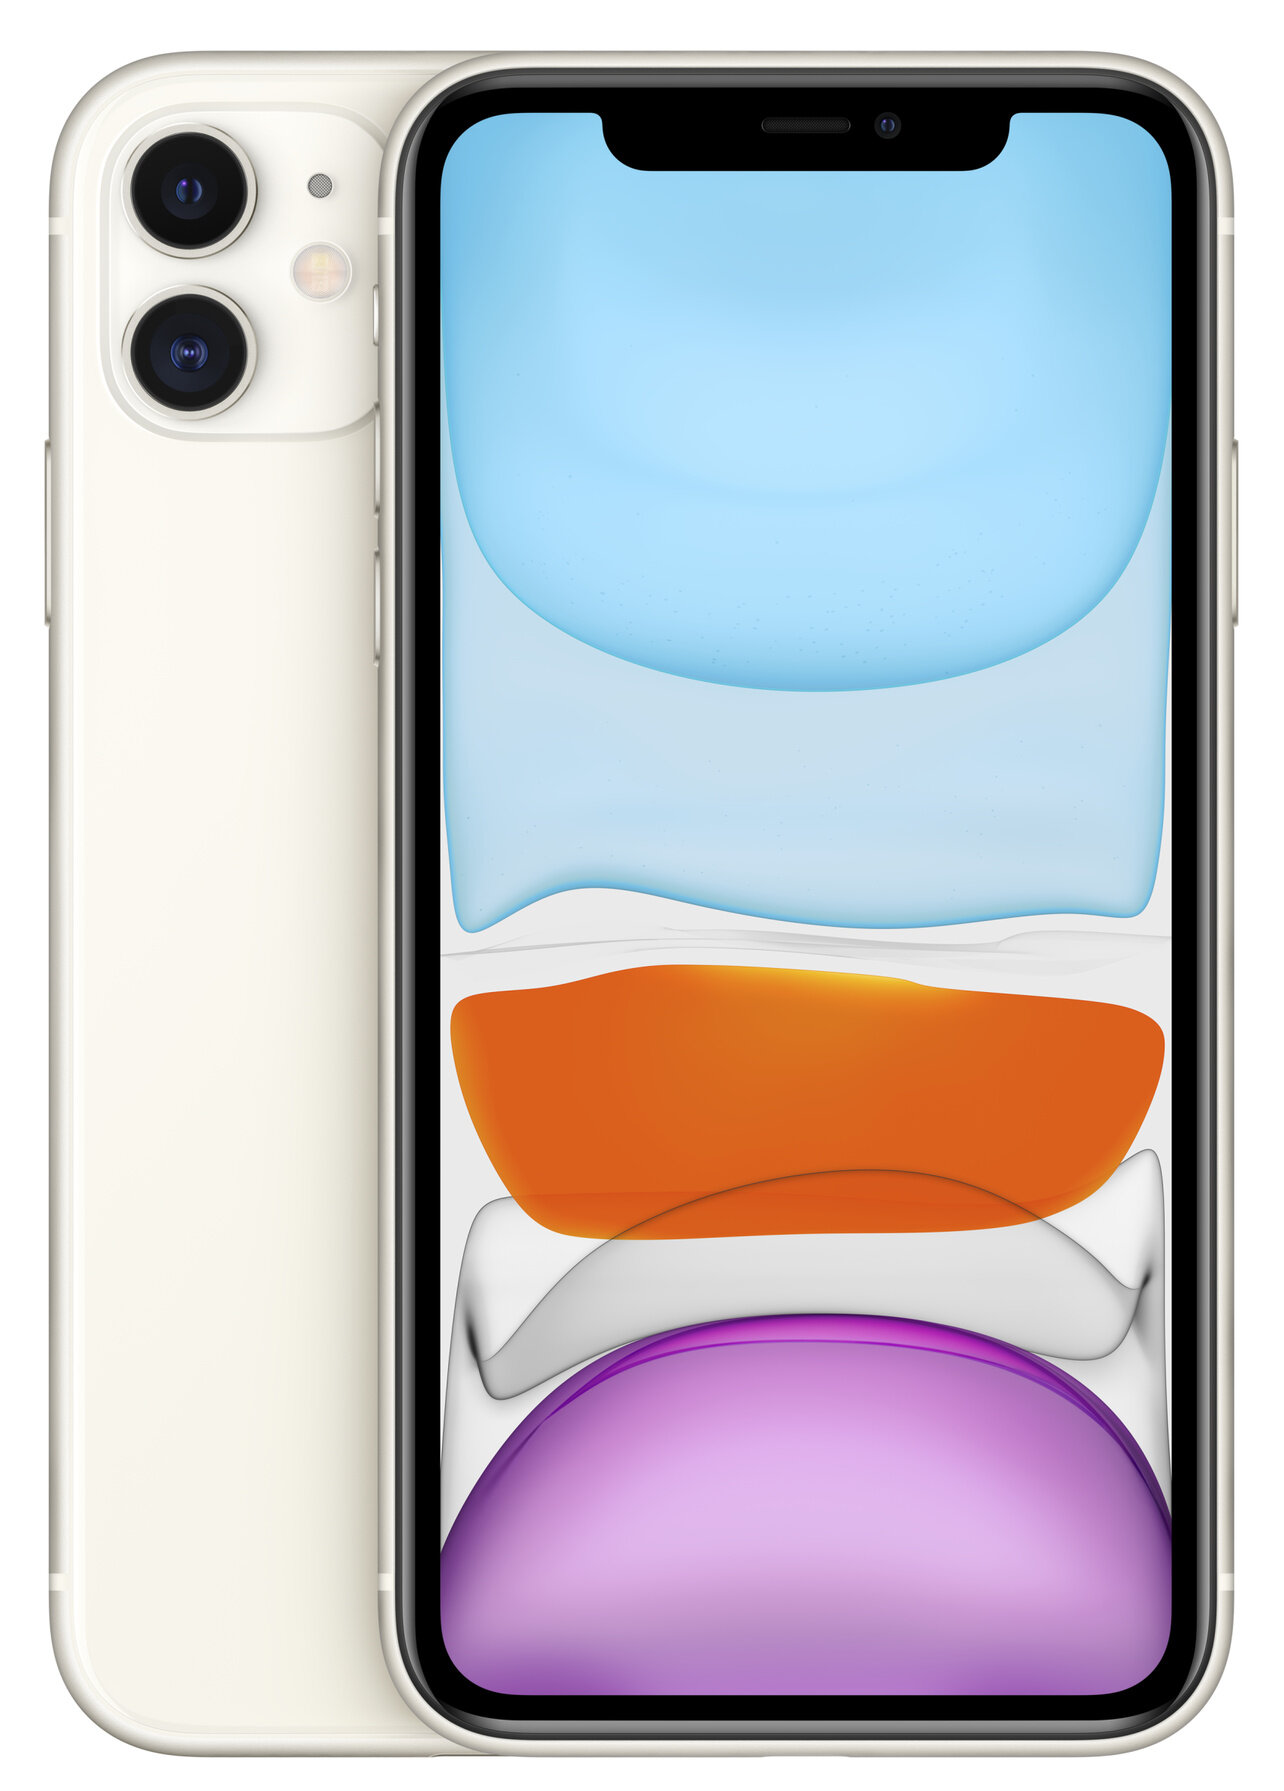 Smartfon APPLE iPhone 11 White 64GB